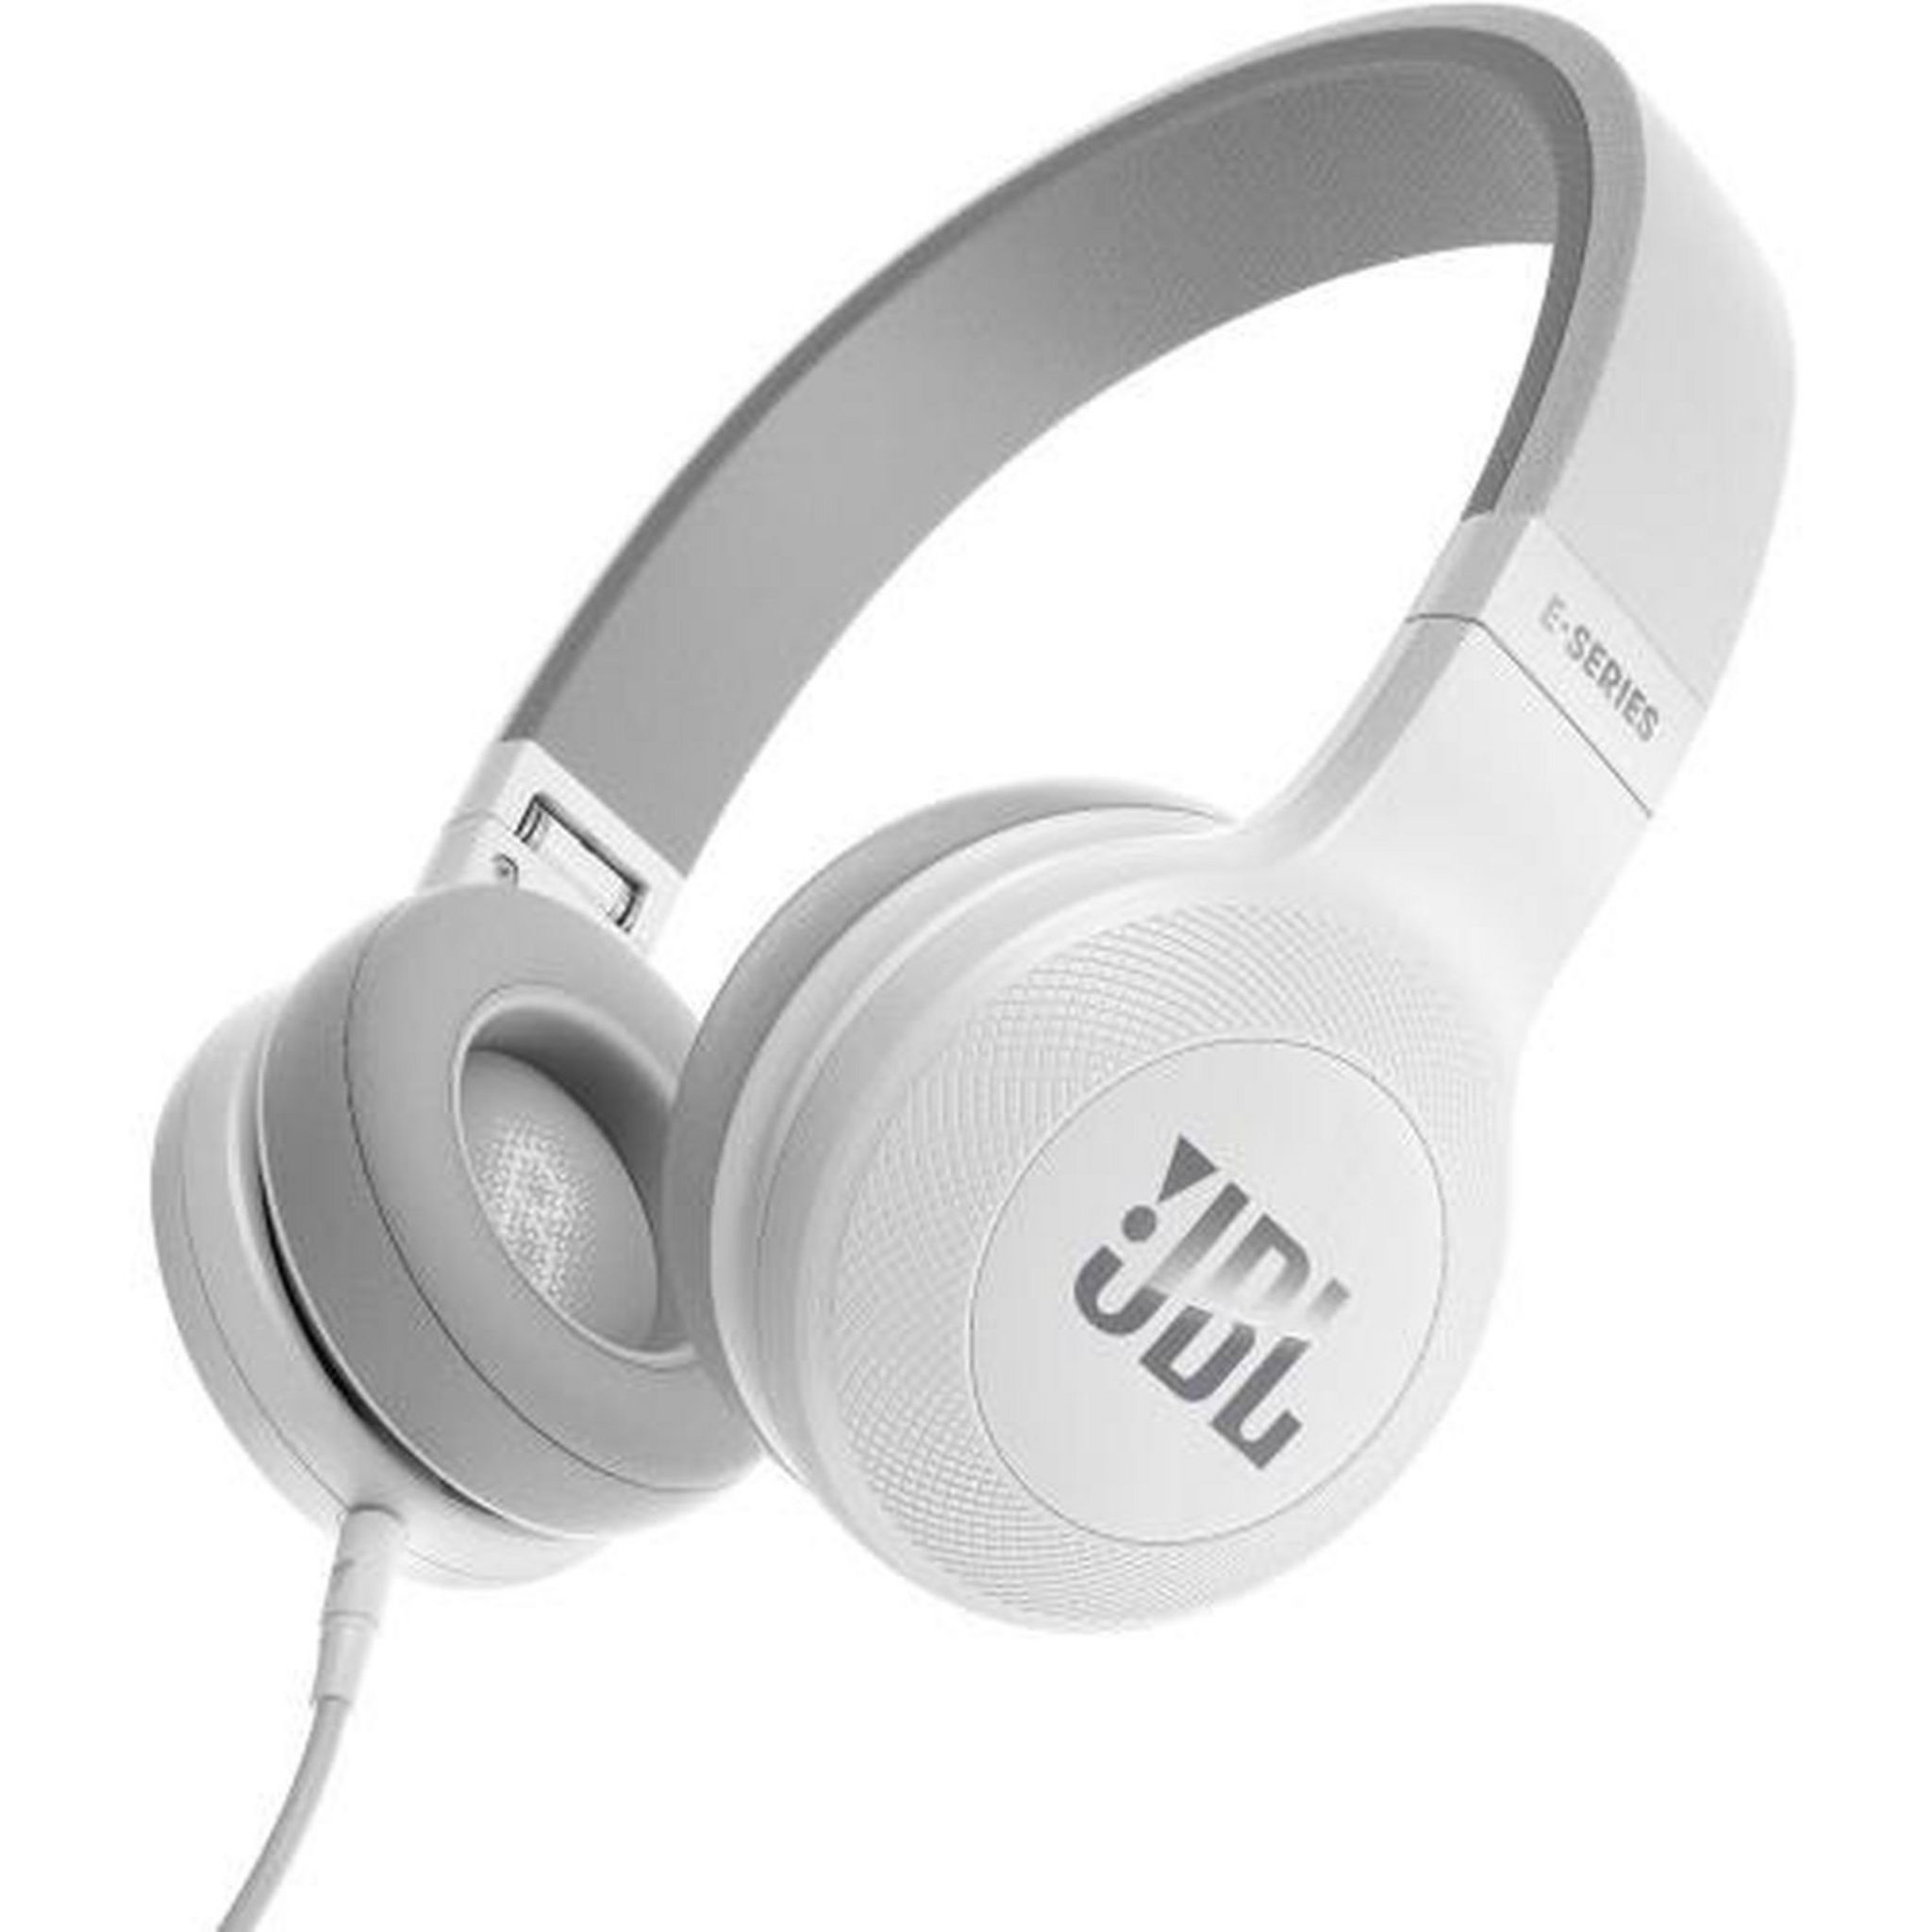 JBL Casque audio filaire - Blanc - E35 pas cher 